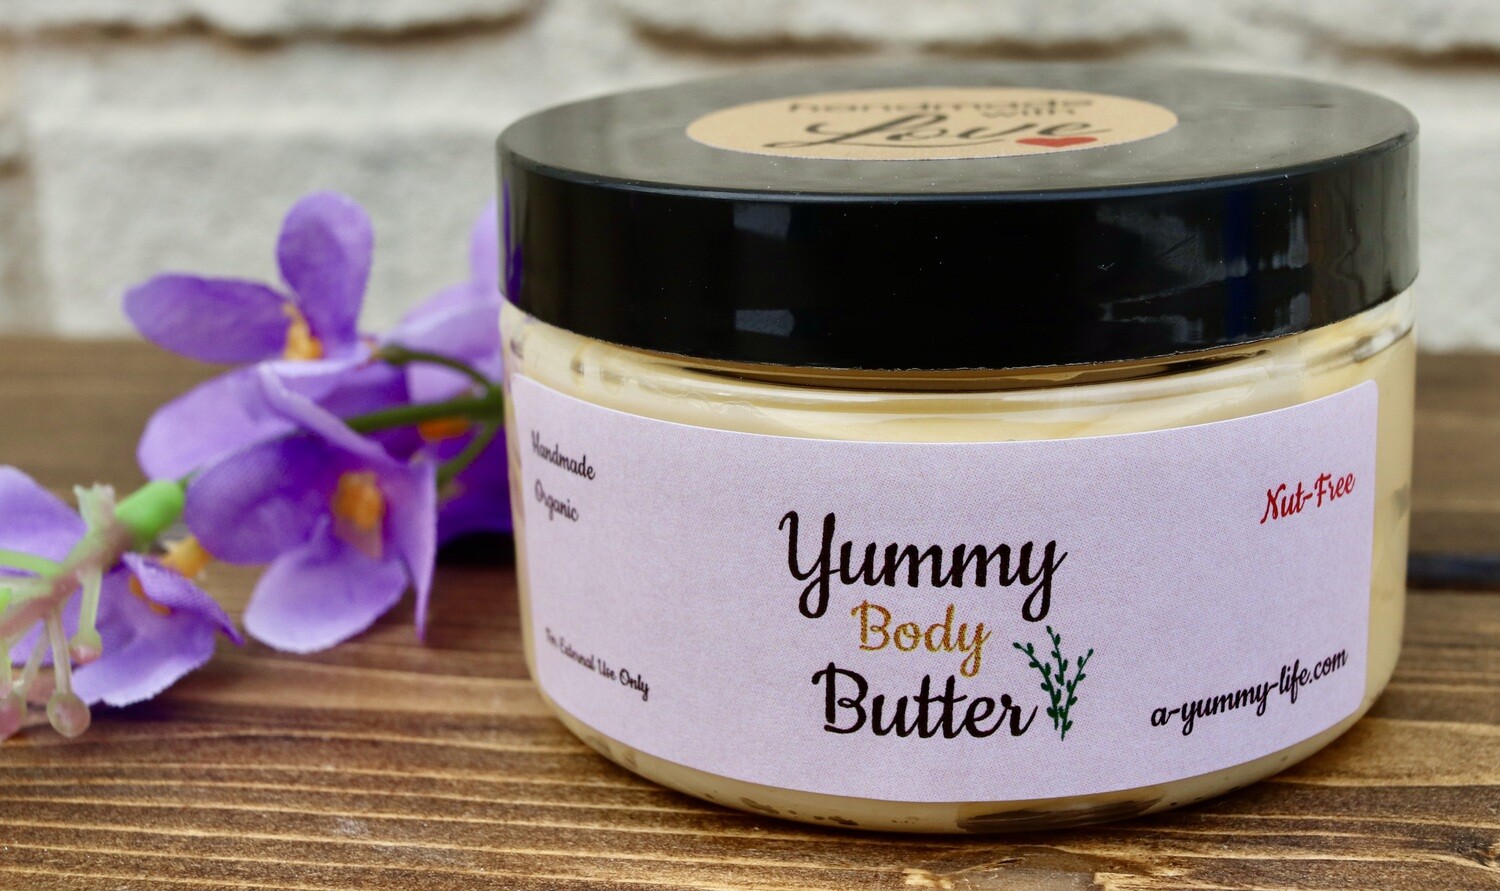 Nut-Free - Yummy Body Butter